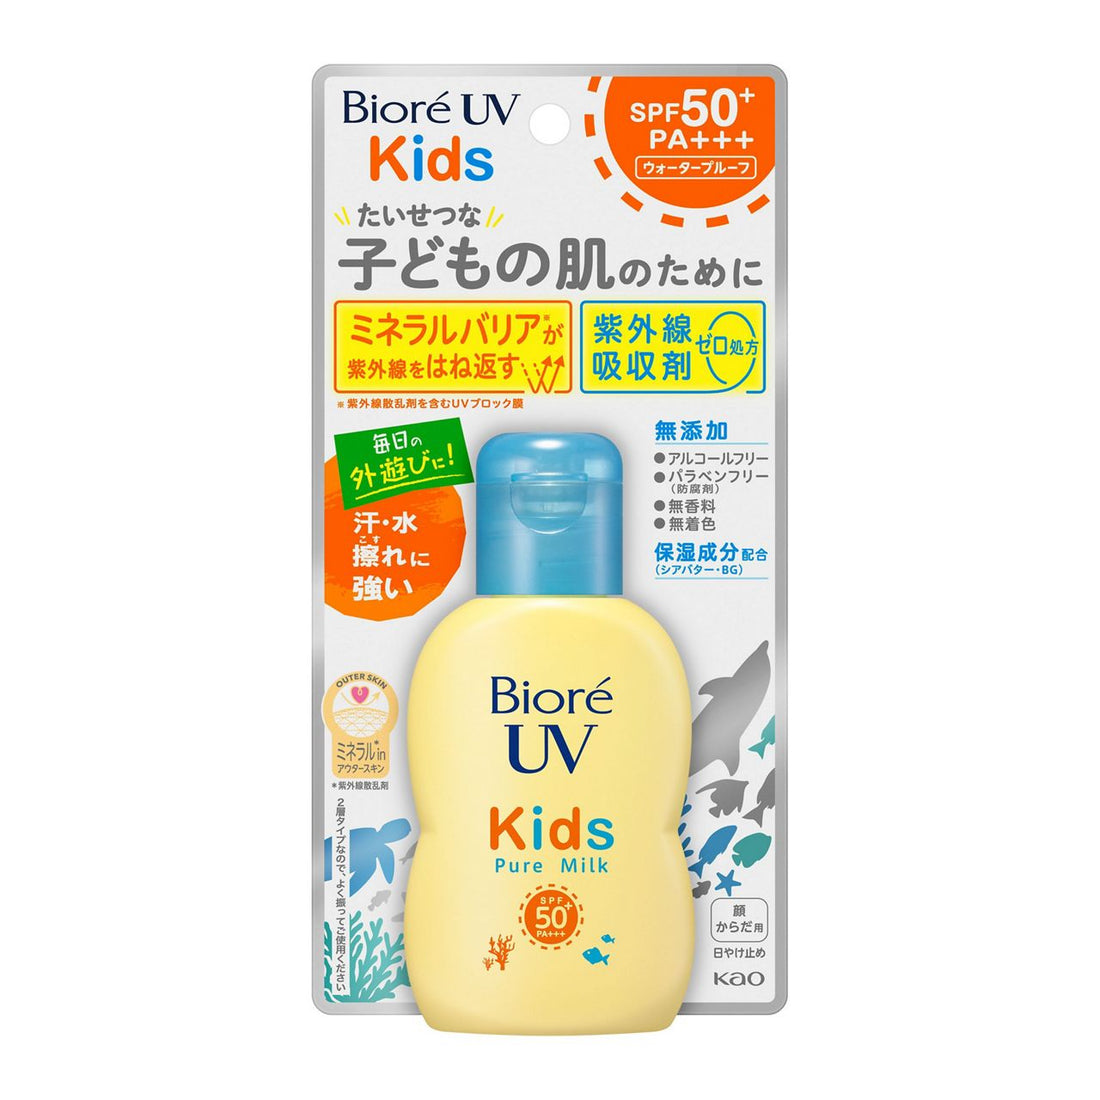 Biore UV Kids Pure Milk SPF 50+ PA+++